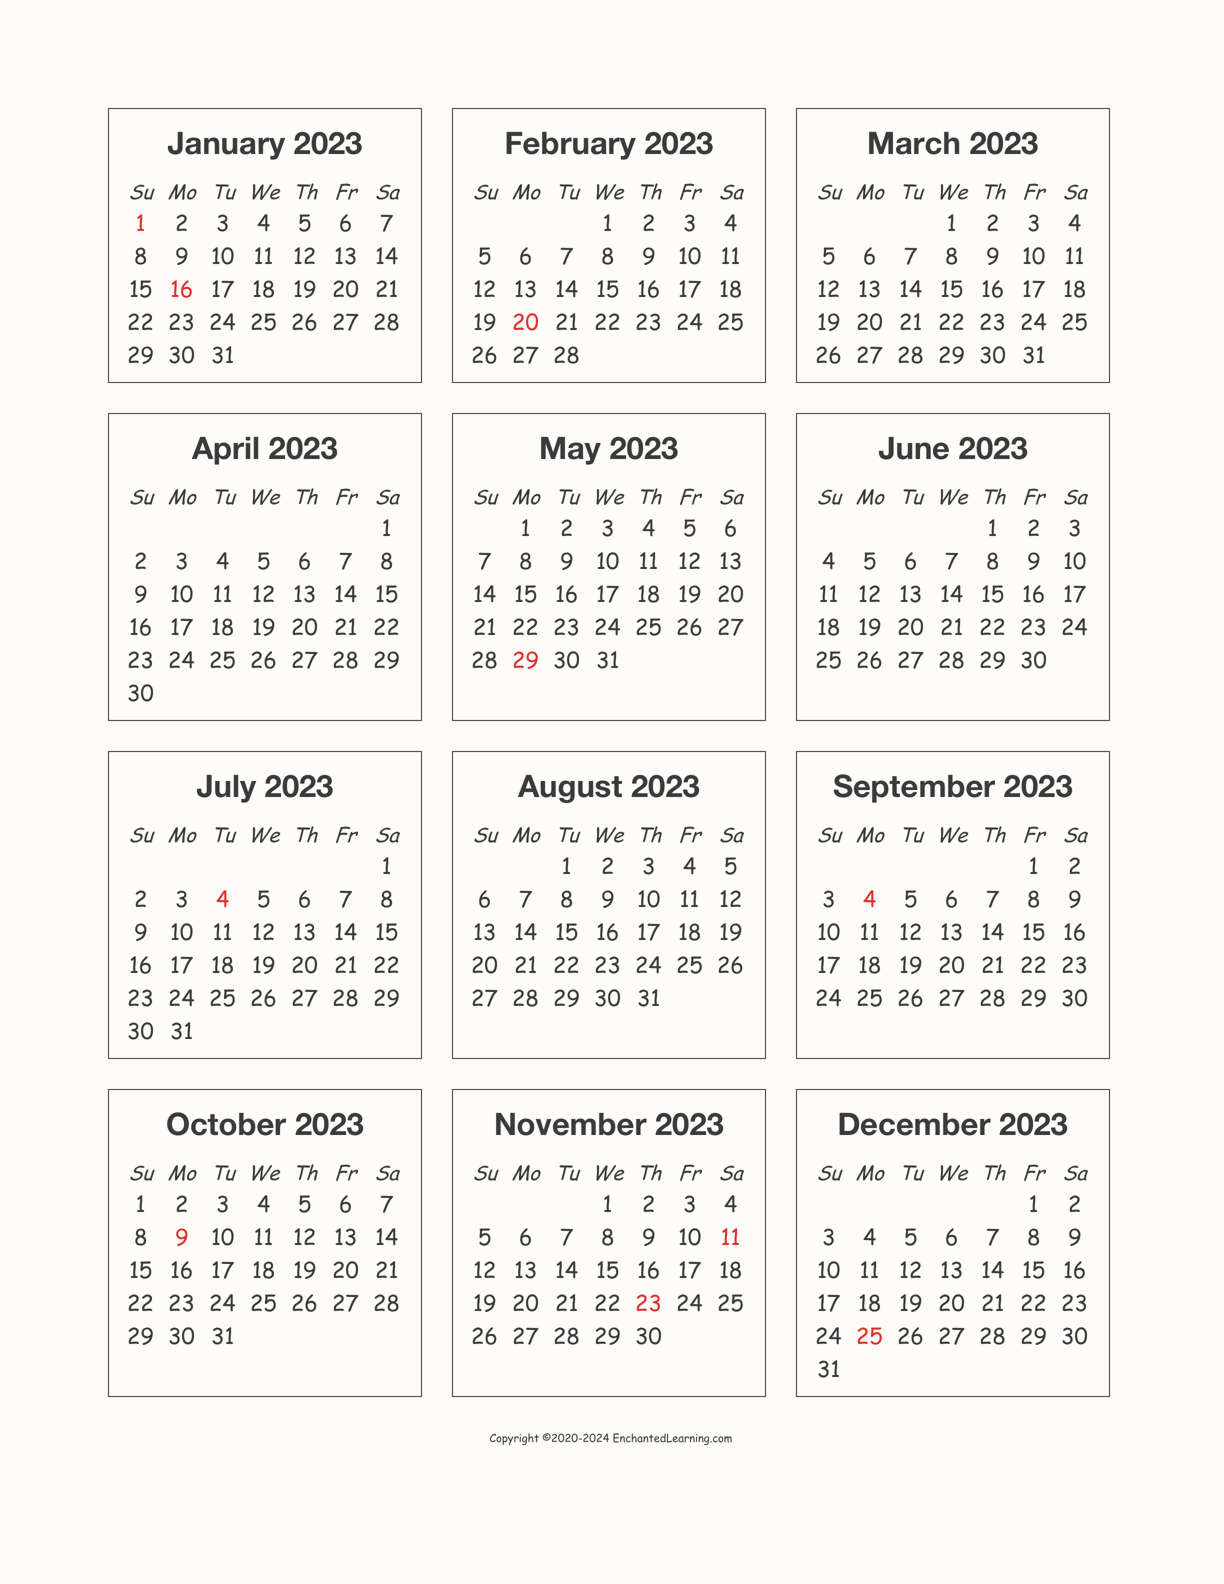 2023 calendar templates and images - 2023 calendar free printable word ...